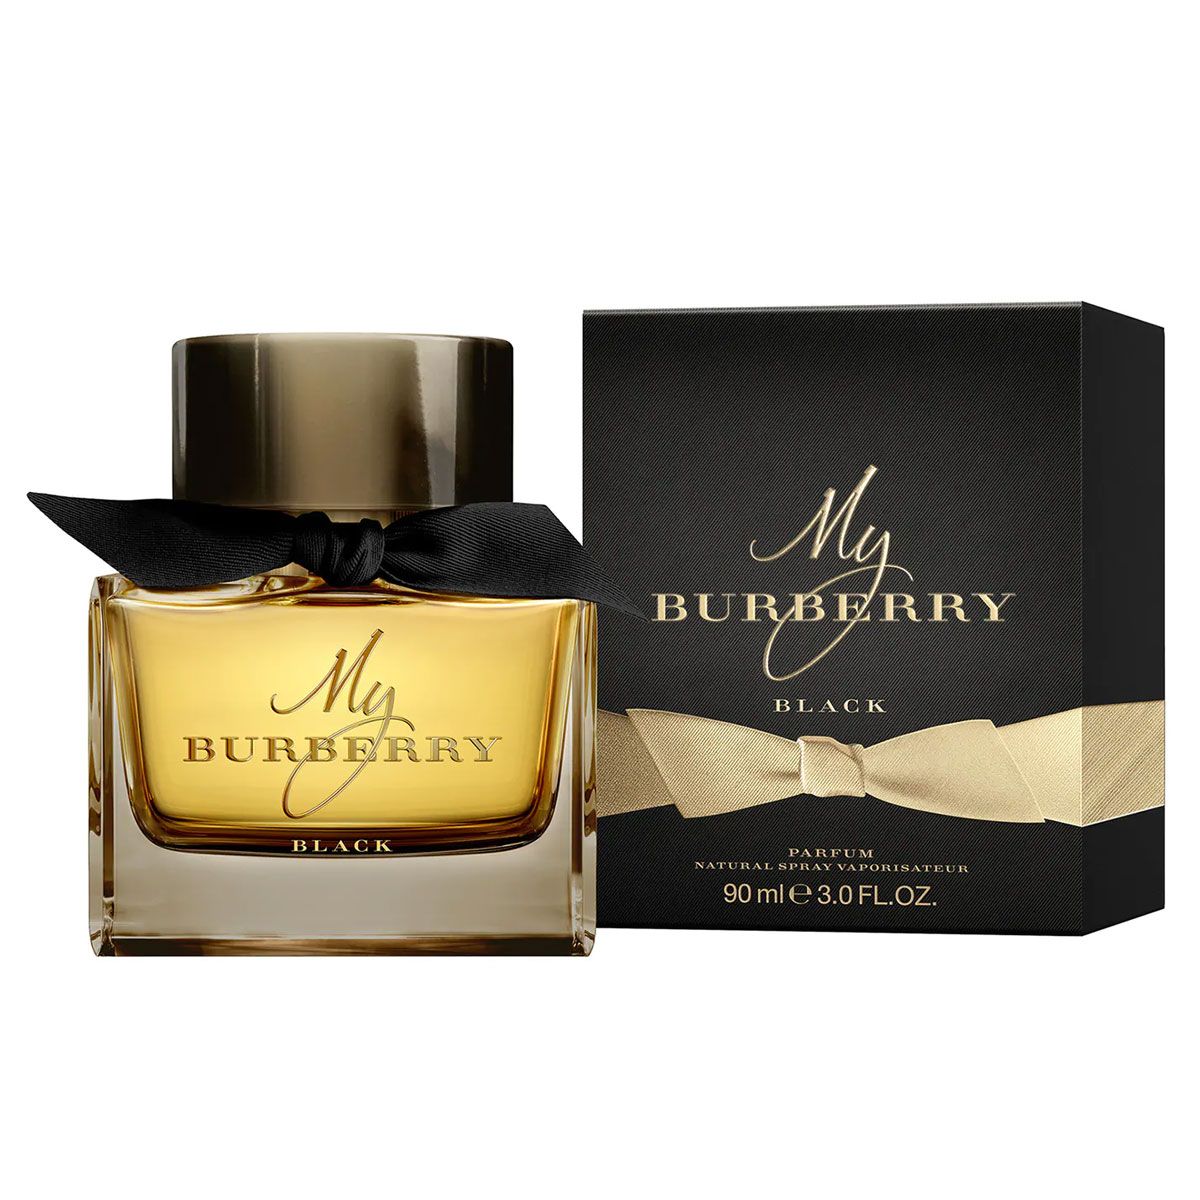 Actualizar 66+ imagen burberry my burberry black eau de parfum